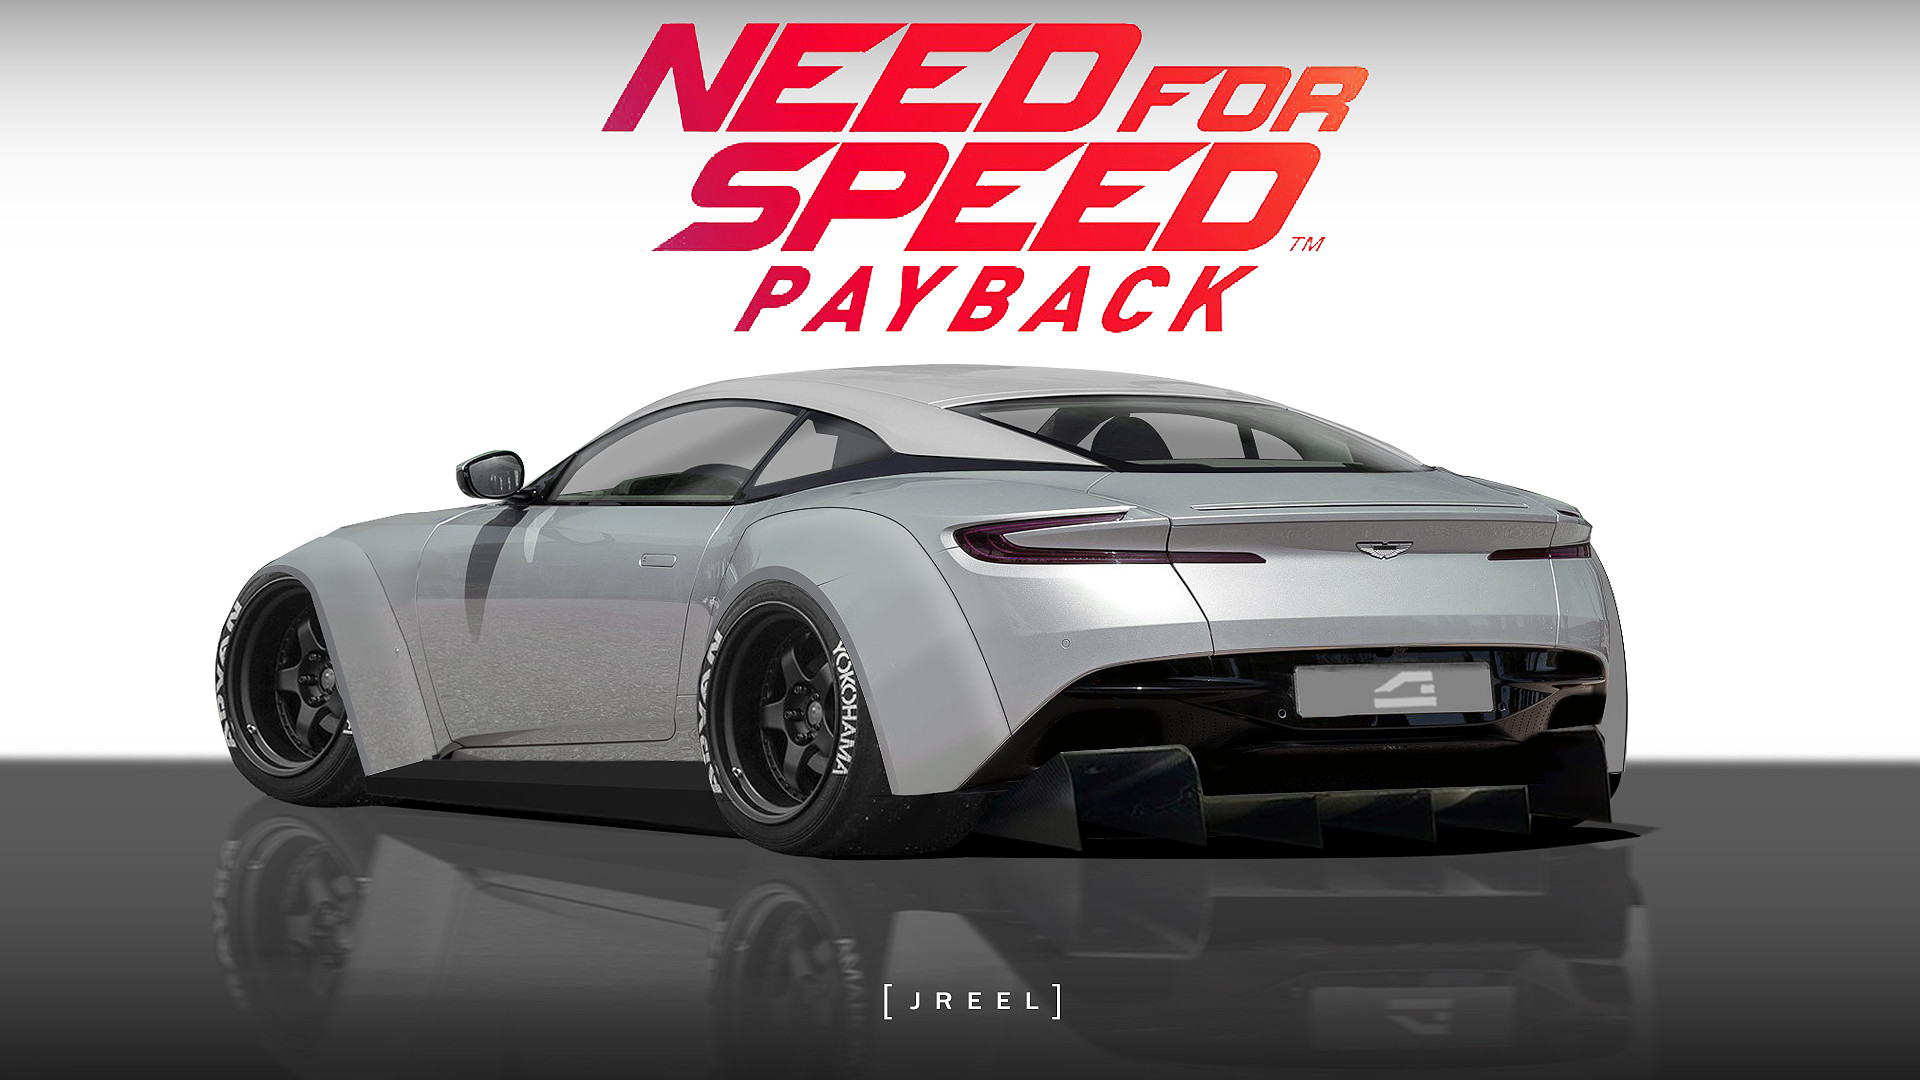 Descarga gratis la imagen Aston Martin, Aston Martin Db11, Videojuego, Need For Speed: Payback en el escritorio de tu PC